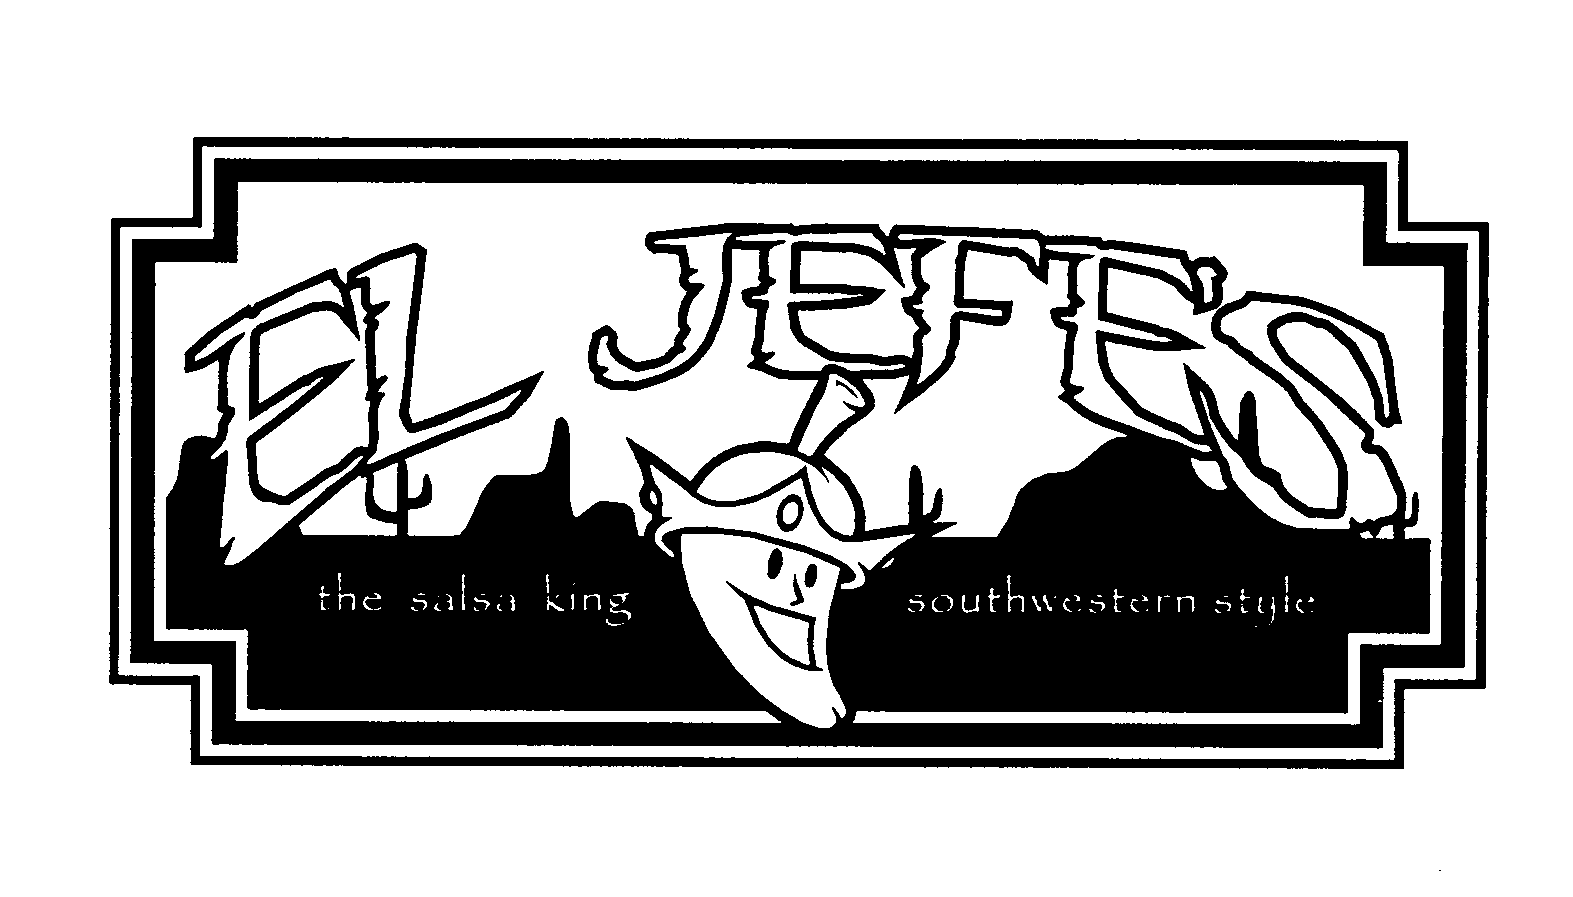  EL JEFE'S THE SALSA KING SOUTHWESTERN STYLE